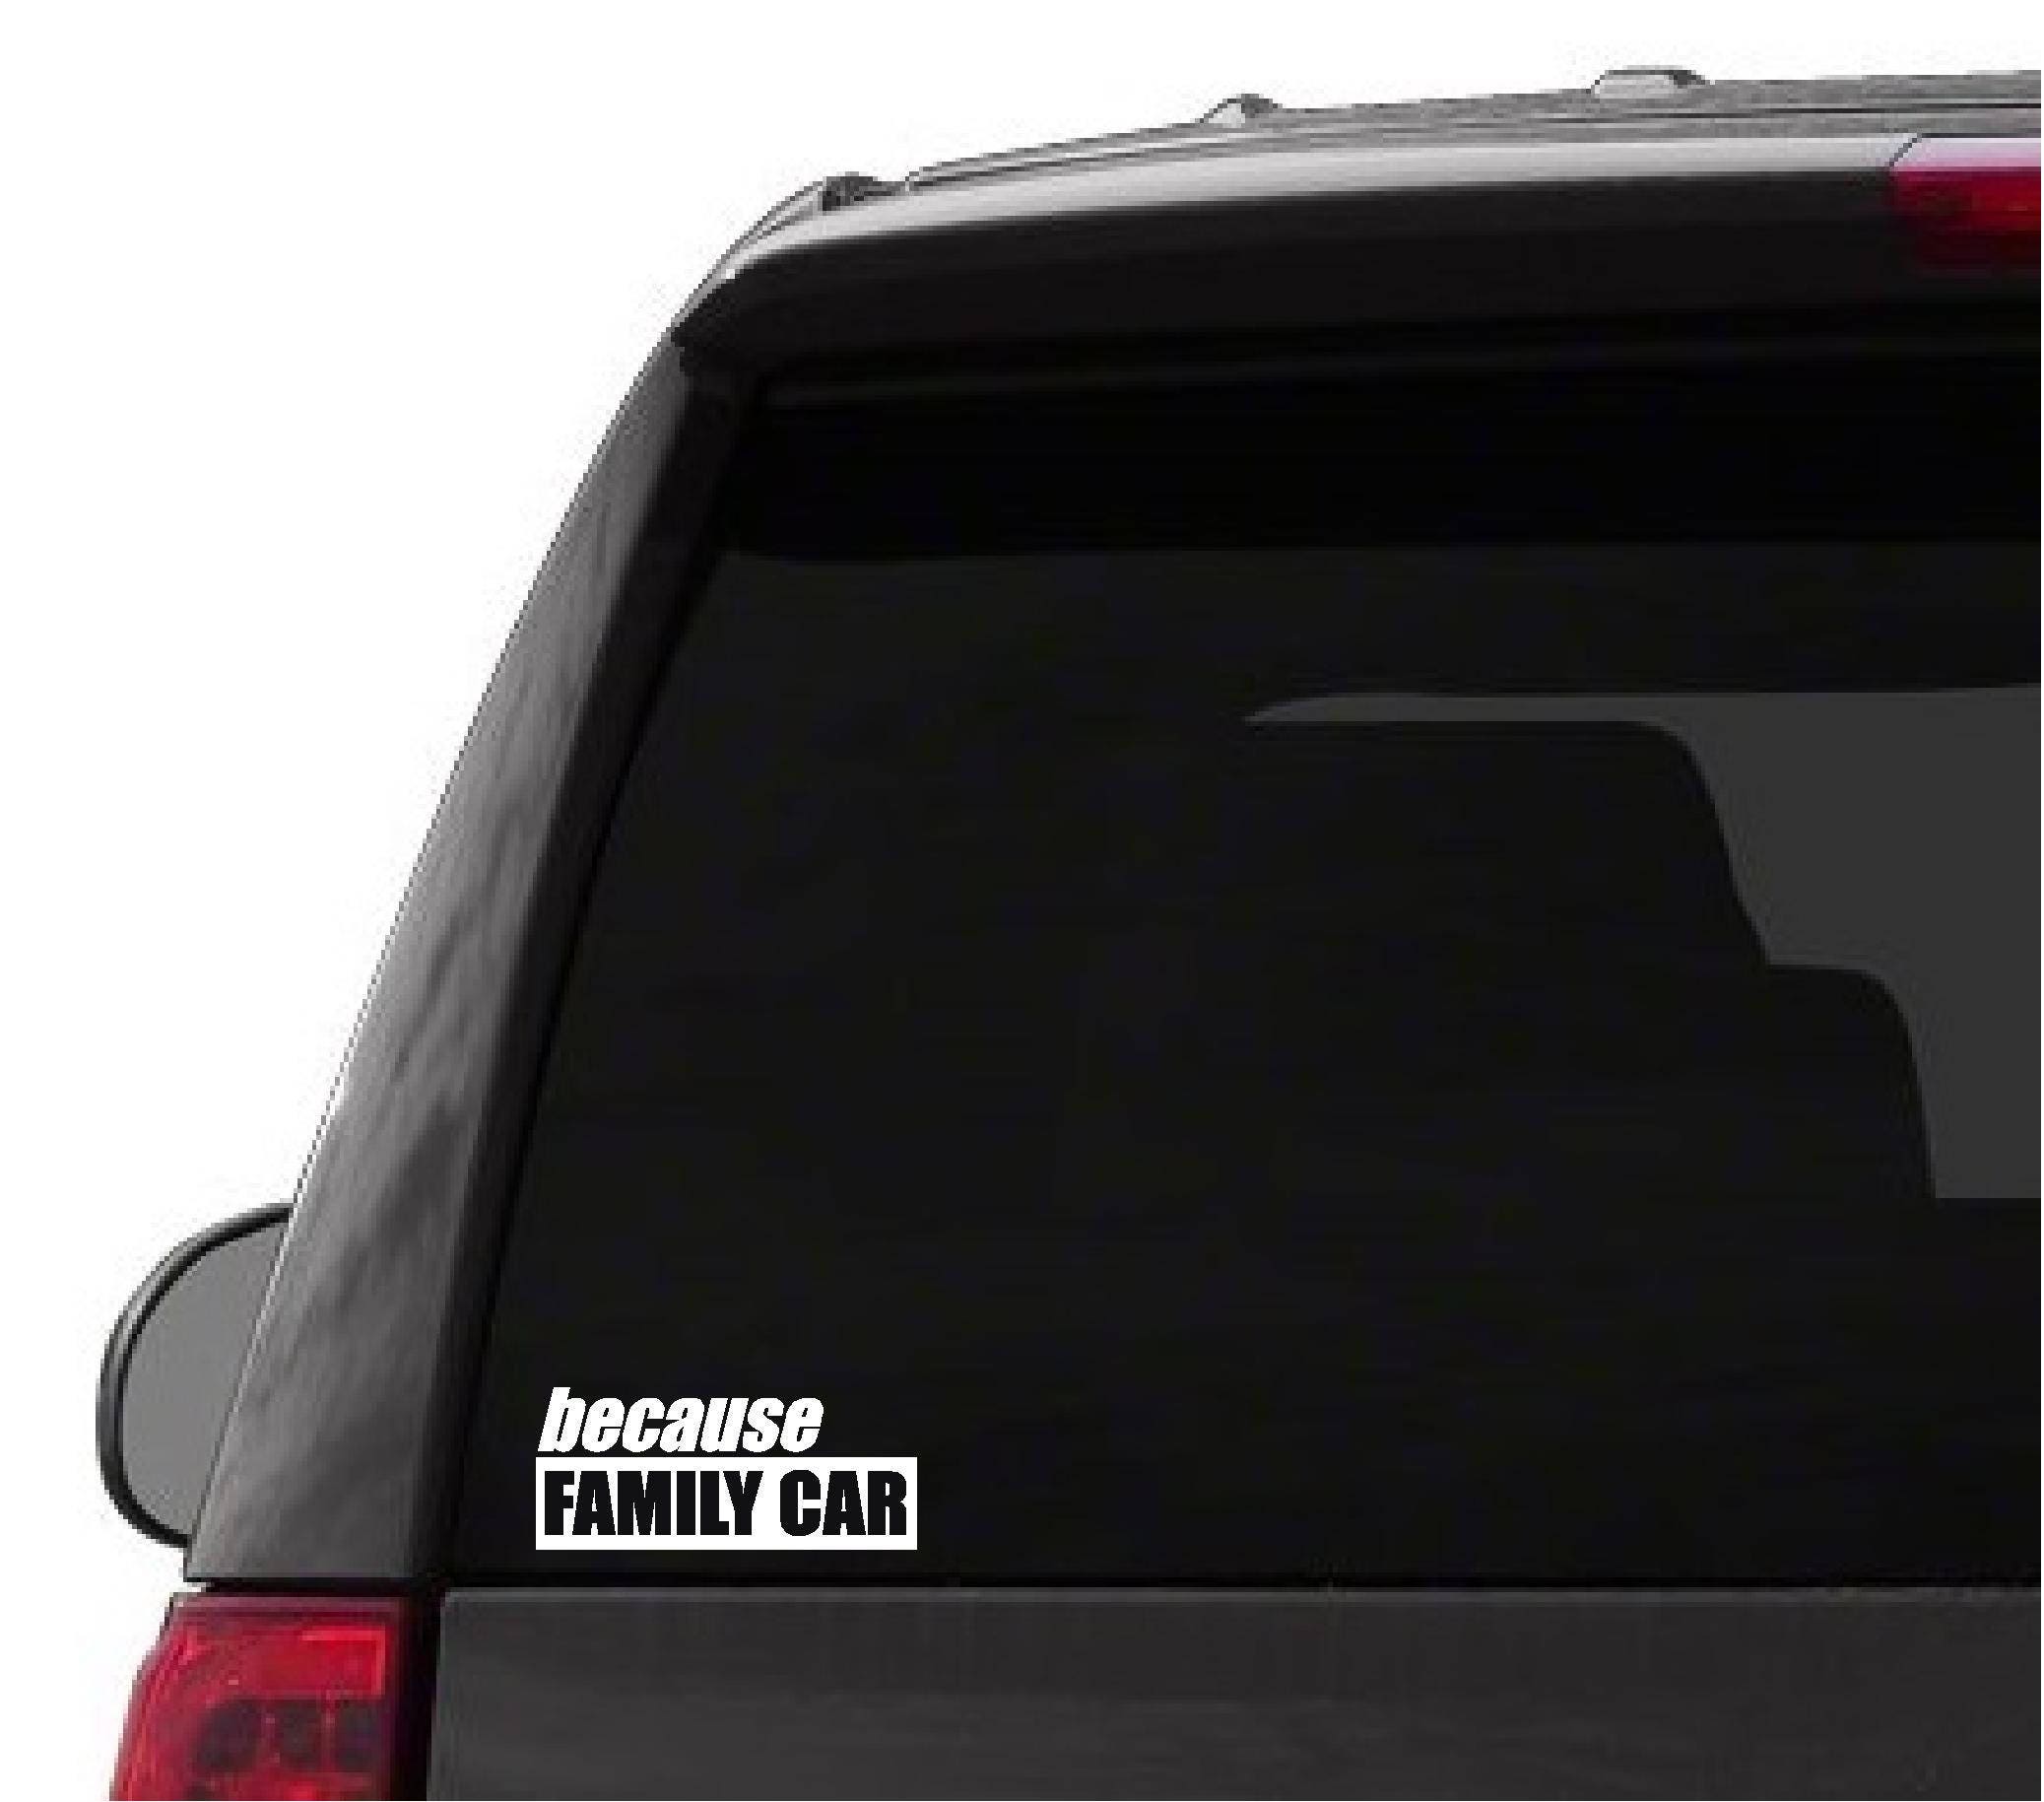 Accident Hit / Kill Count Funny Bumper Sticker Vinyl Cars Decal Car Truck  Car Window Car Sticker Decal Black / Silver C1058